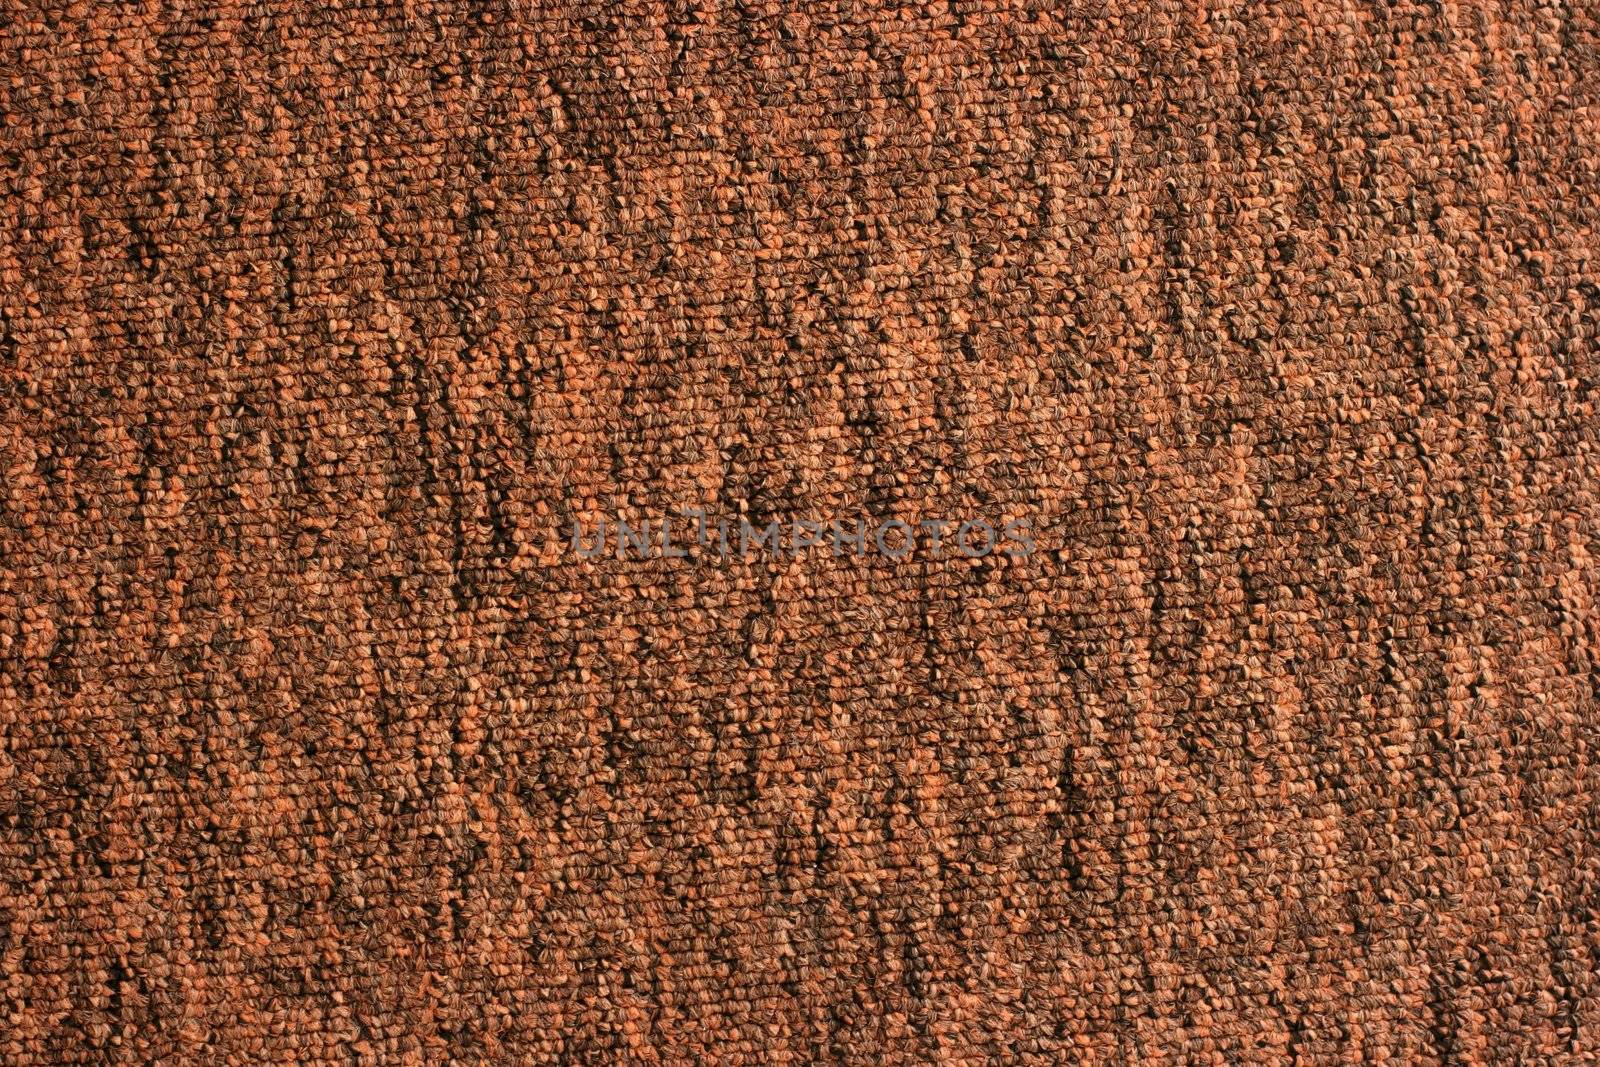 Closeup of the texture of blue carpet